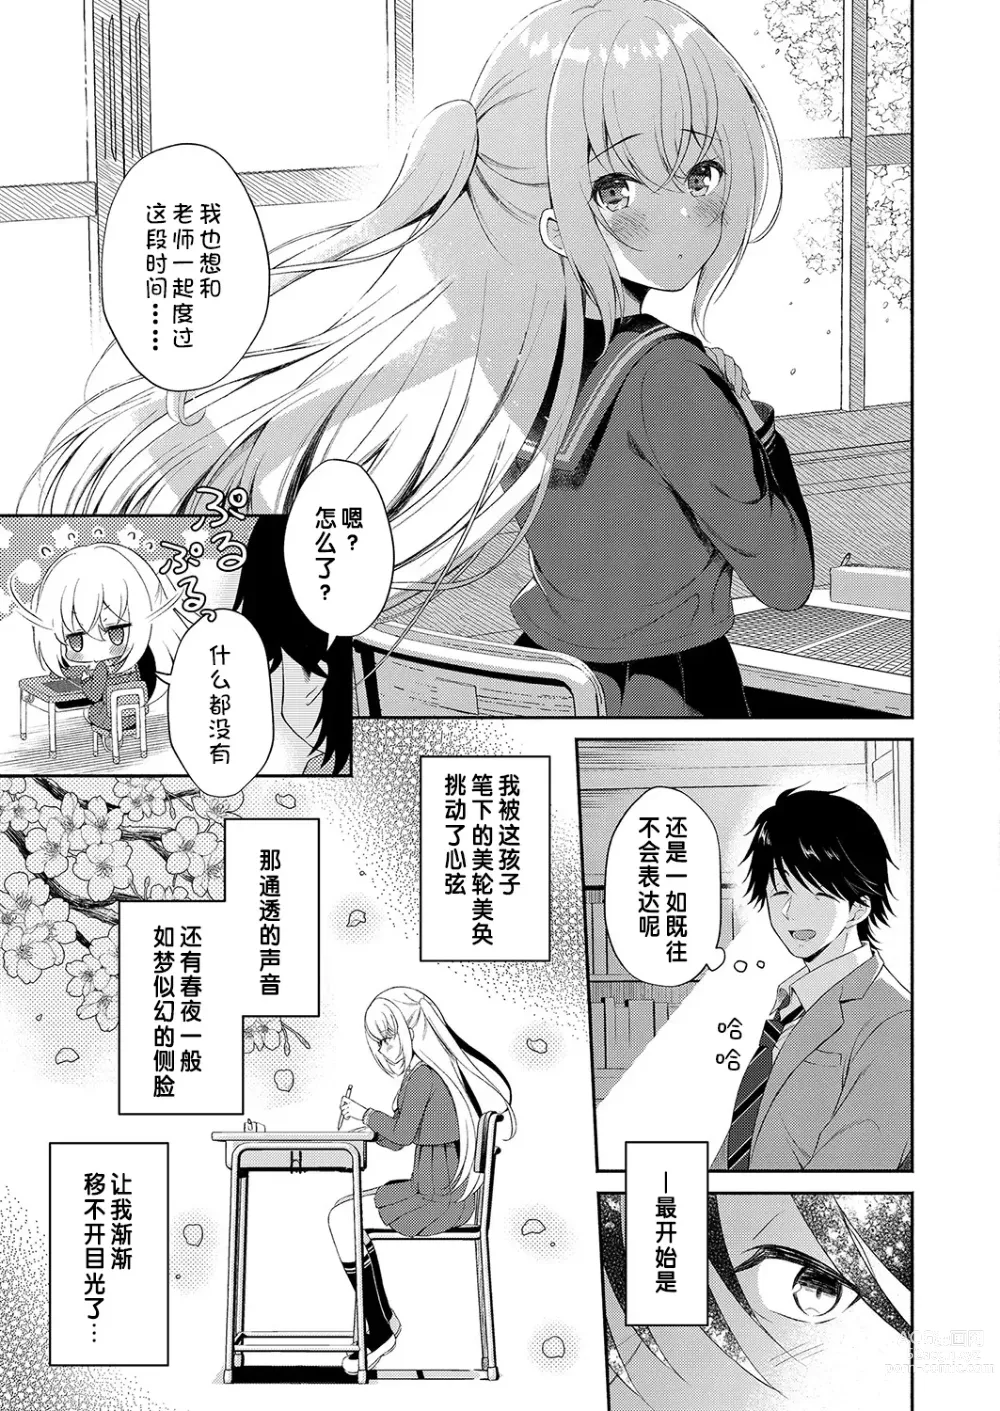 Page 3 of manga 想要传达给你的万千话语